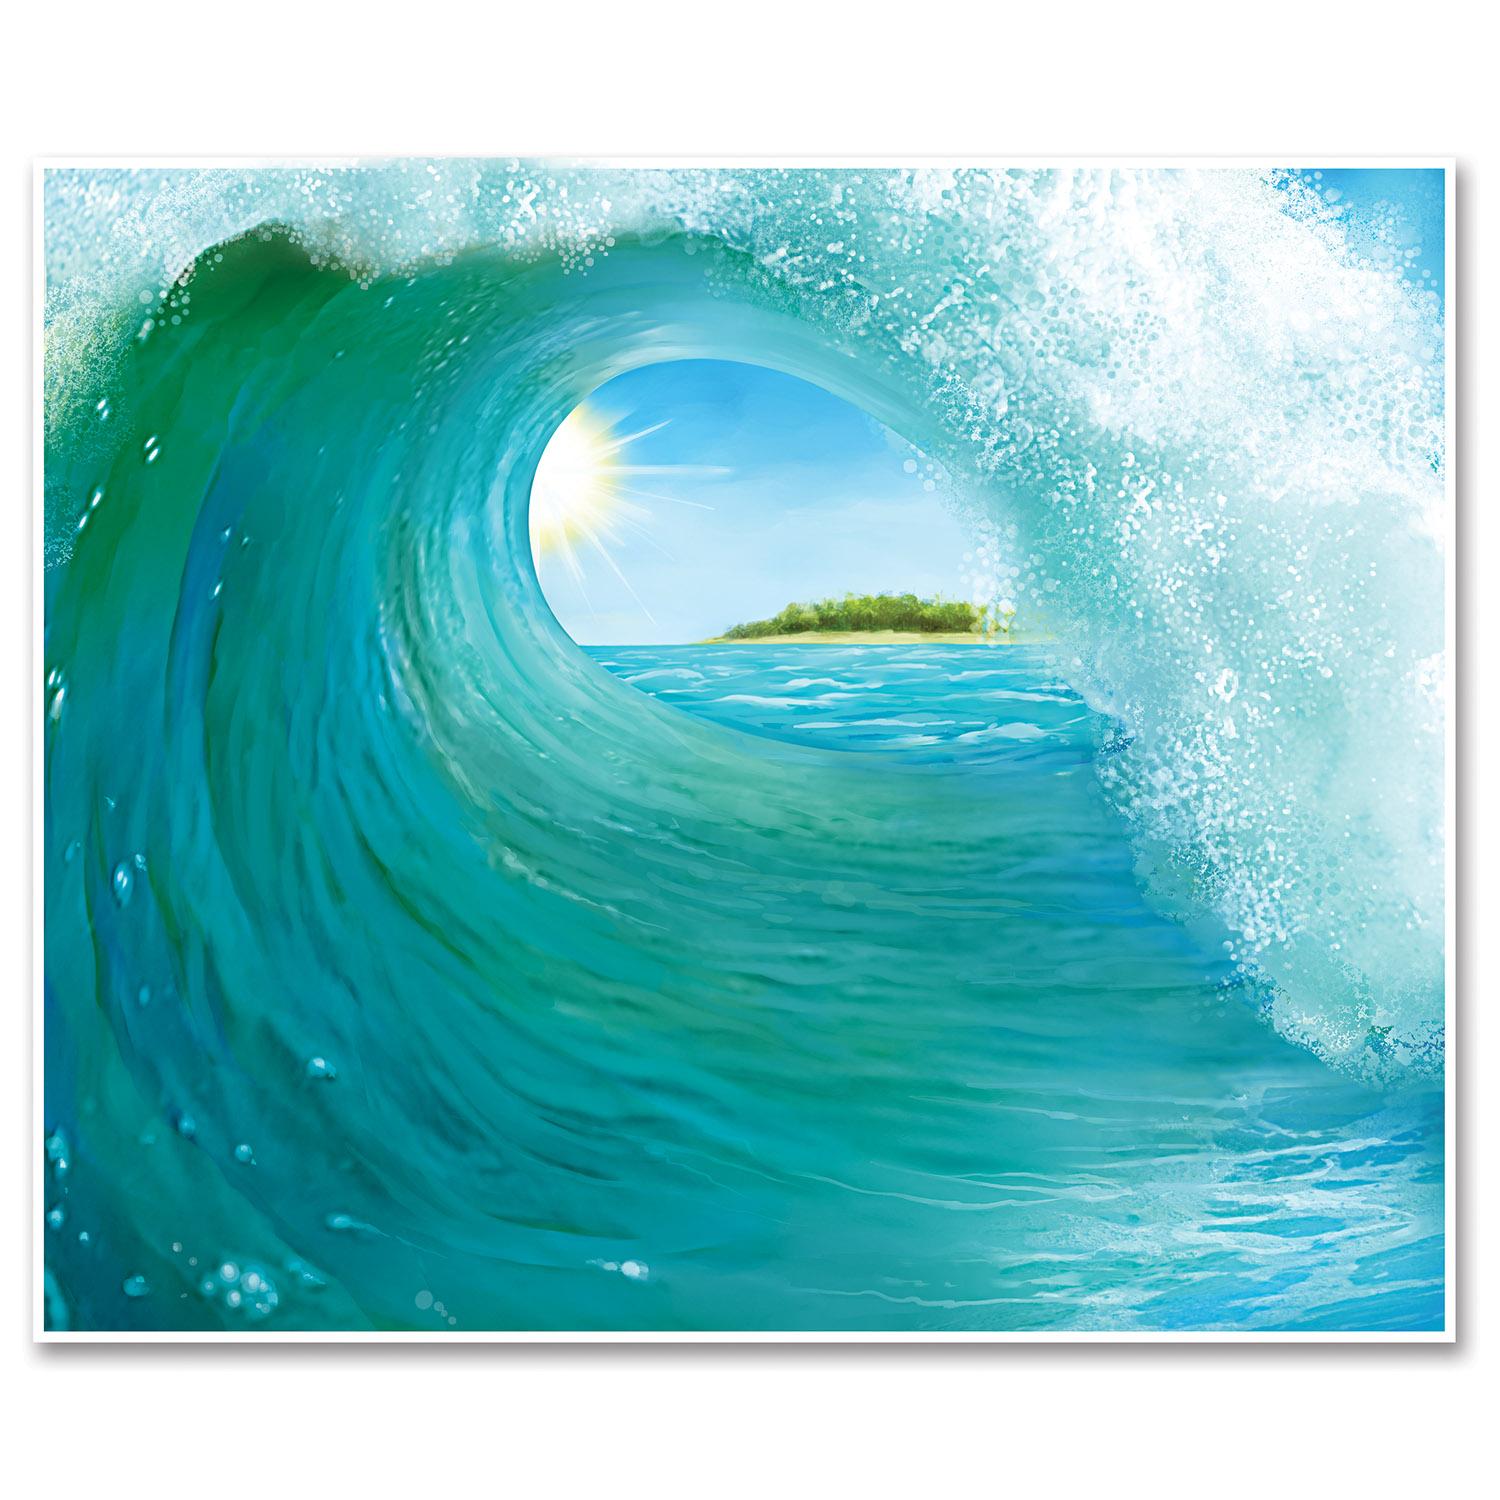 Surf Wave Insta-Mural Room Decor, 6